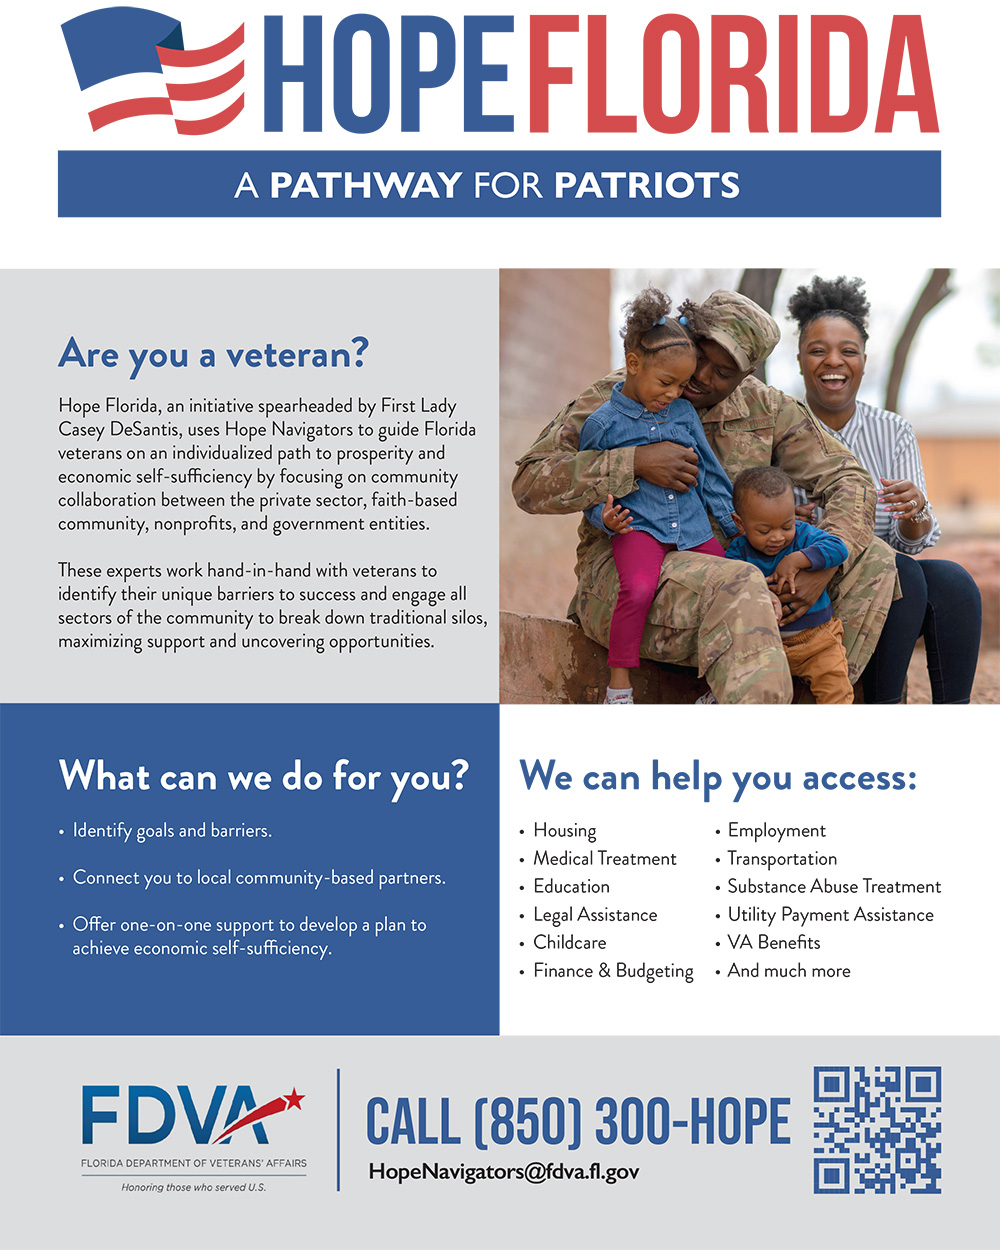 Florida Department of Veterans' Affairs Connecting veterans to